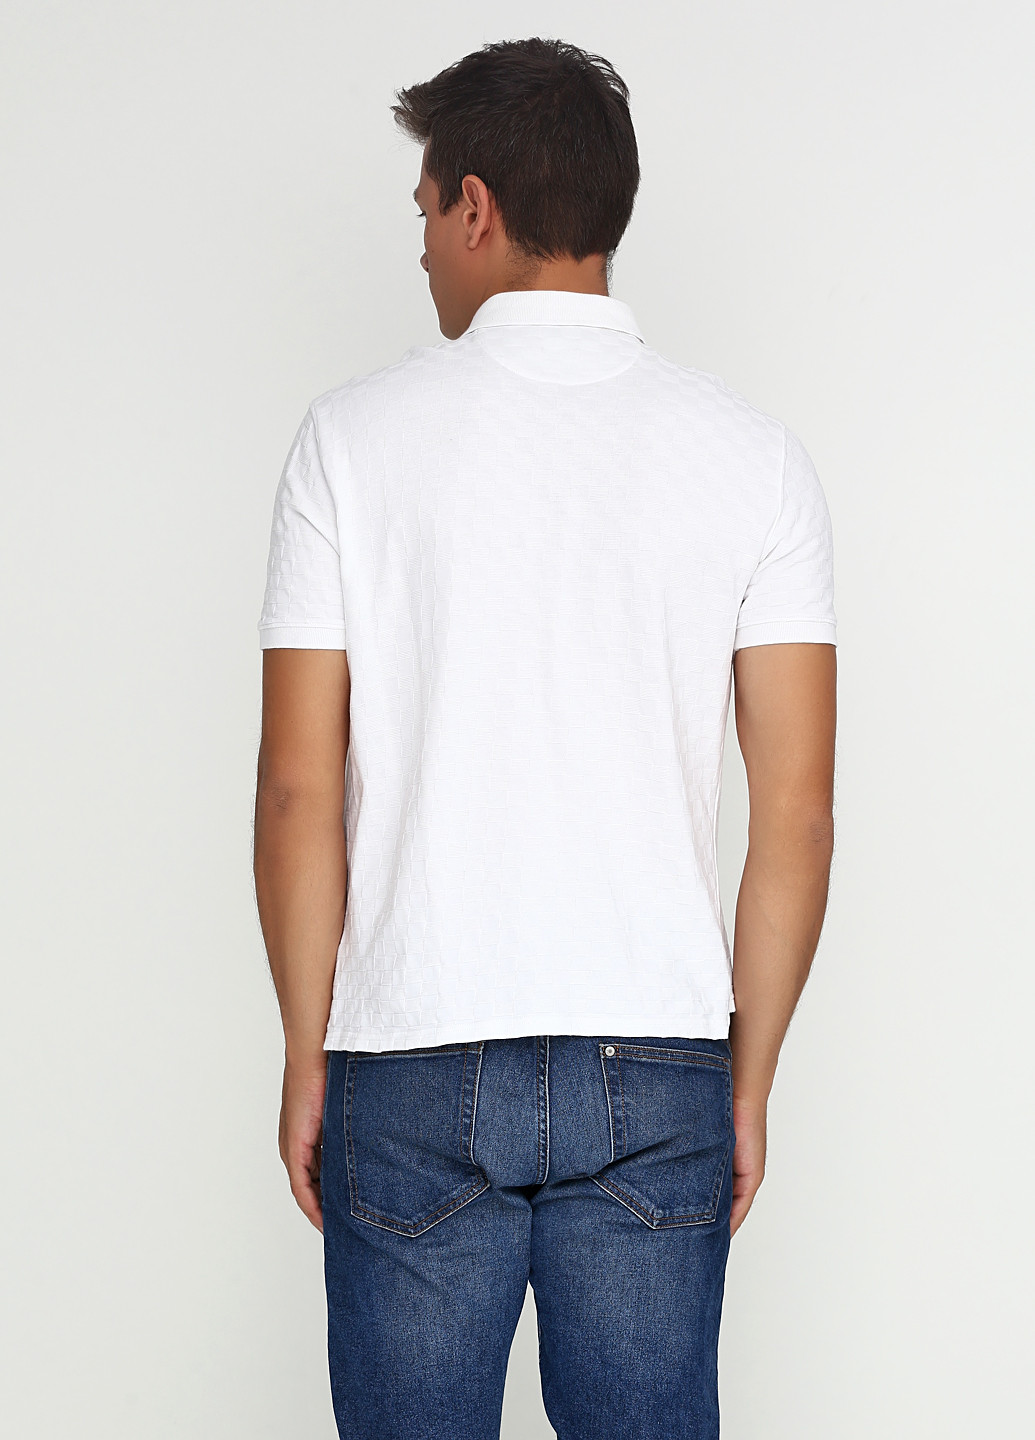 Белая футболка-поло для мужчин Massimo Dutti фактурная